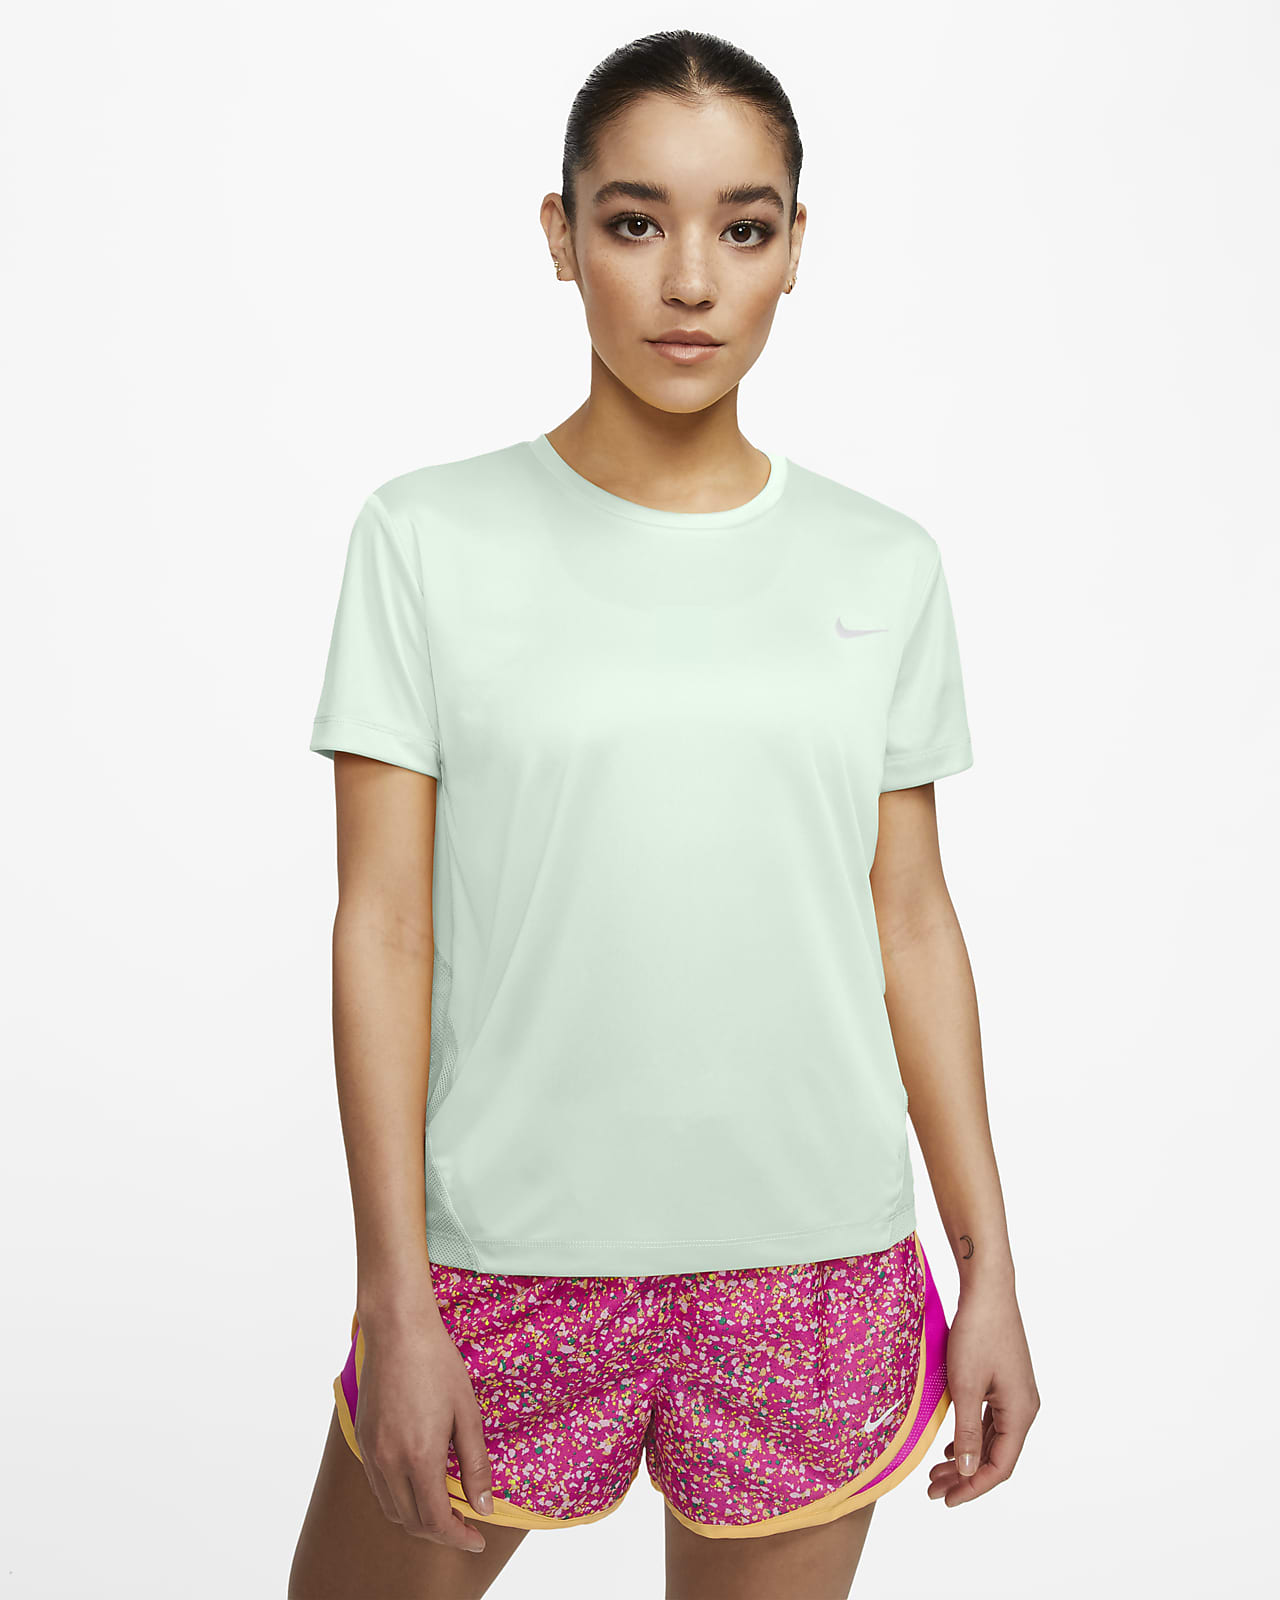 Nike Miler Women's Short-Sleeve Running Top. Nike IL